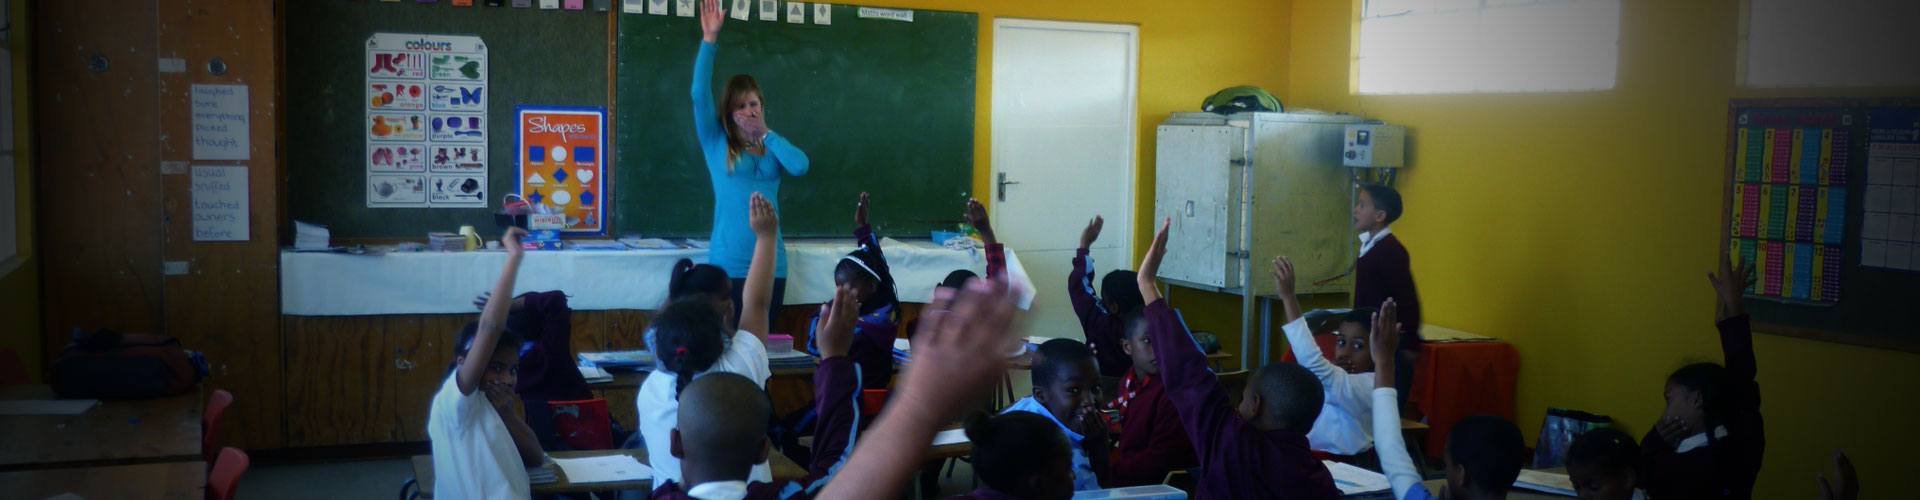 Volunteer Teaching in South Africa - Cape Town